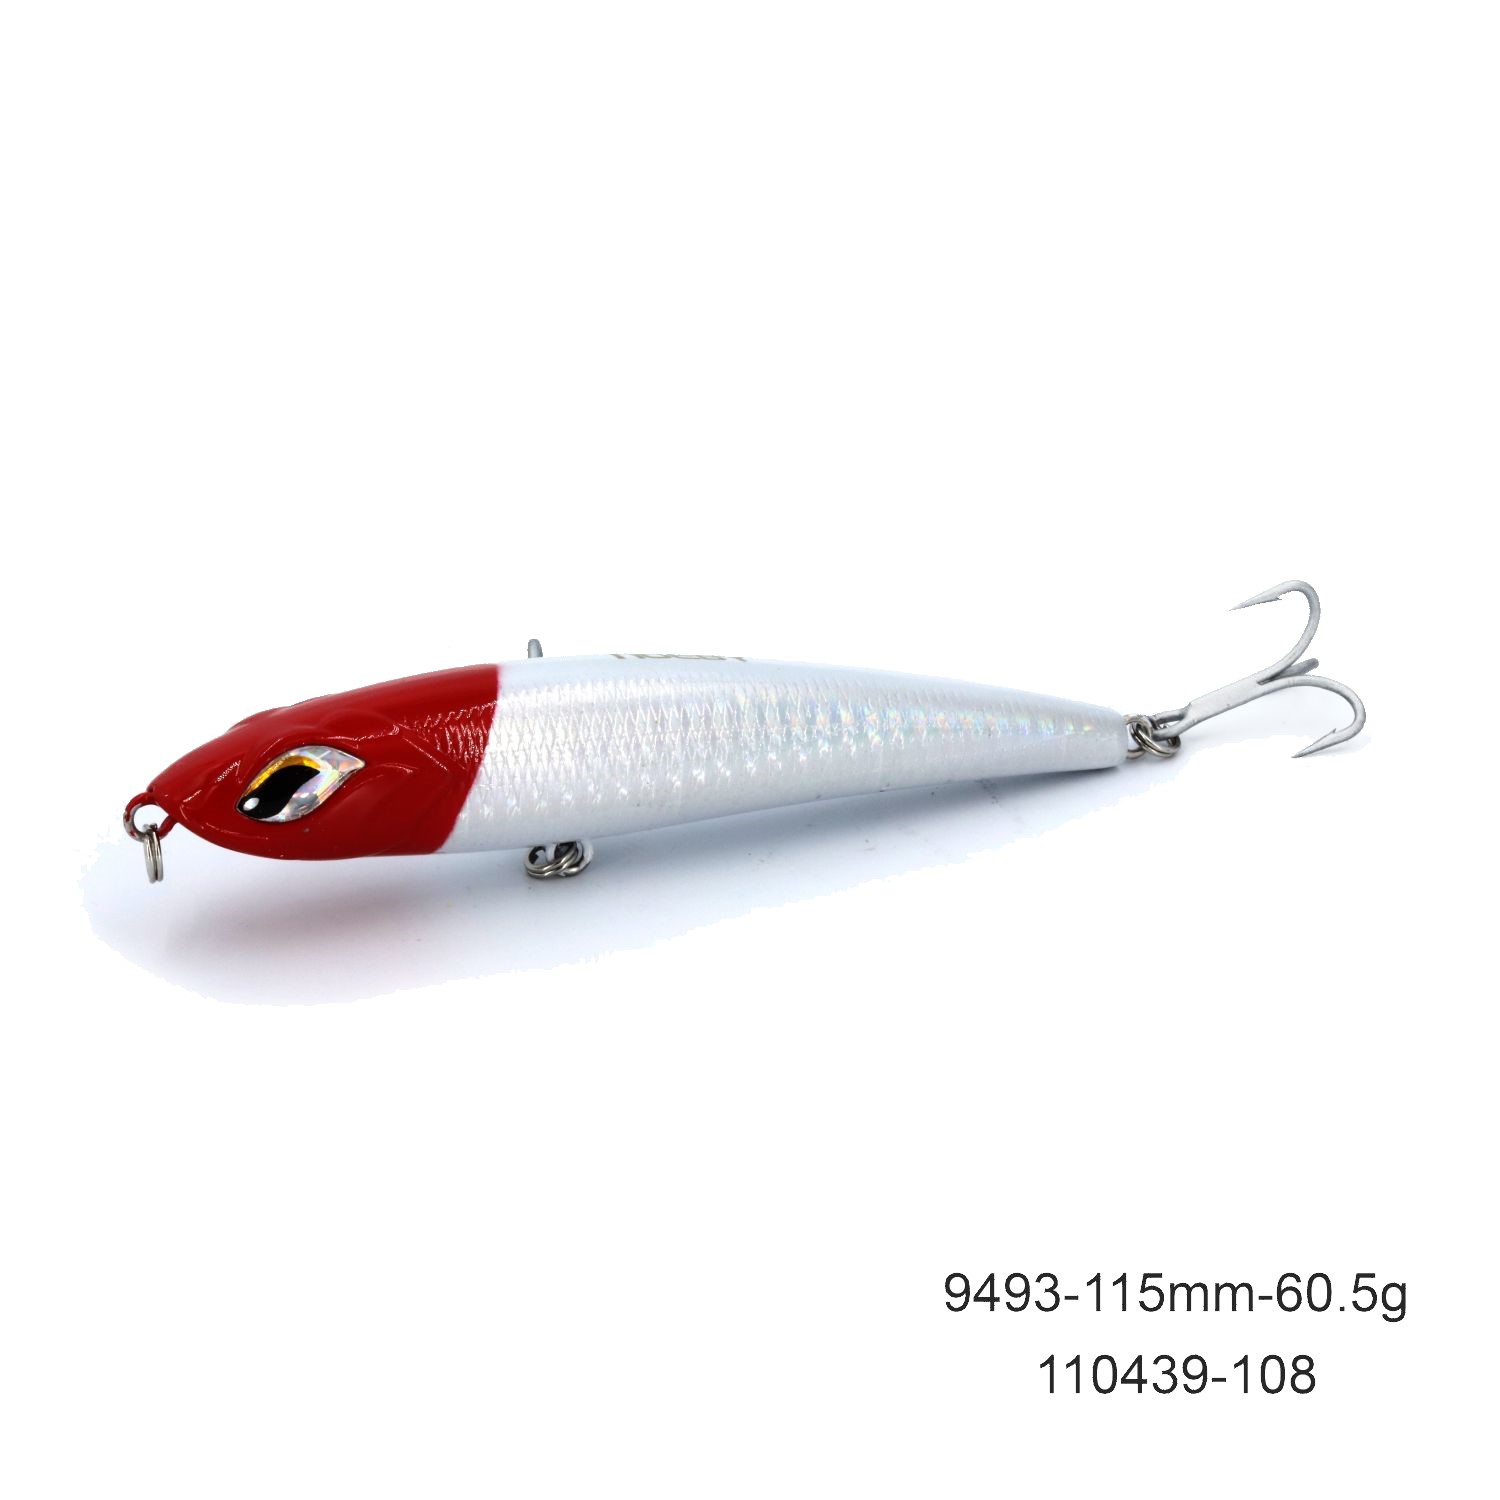 noeby ocean plastic fish lure stick bait-60.5g